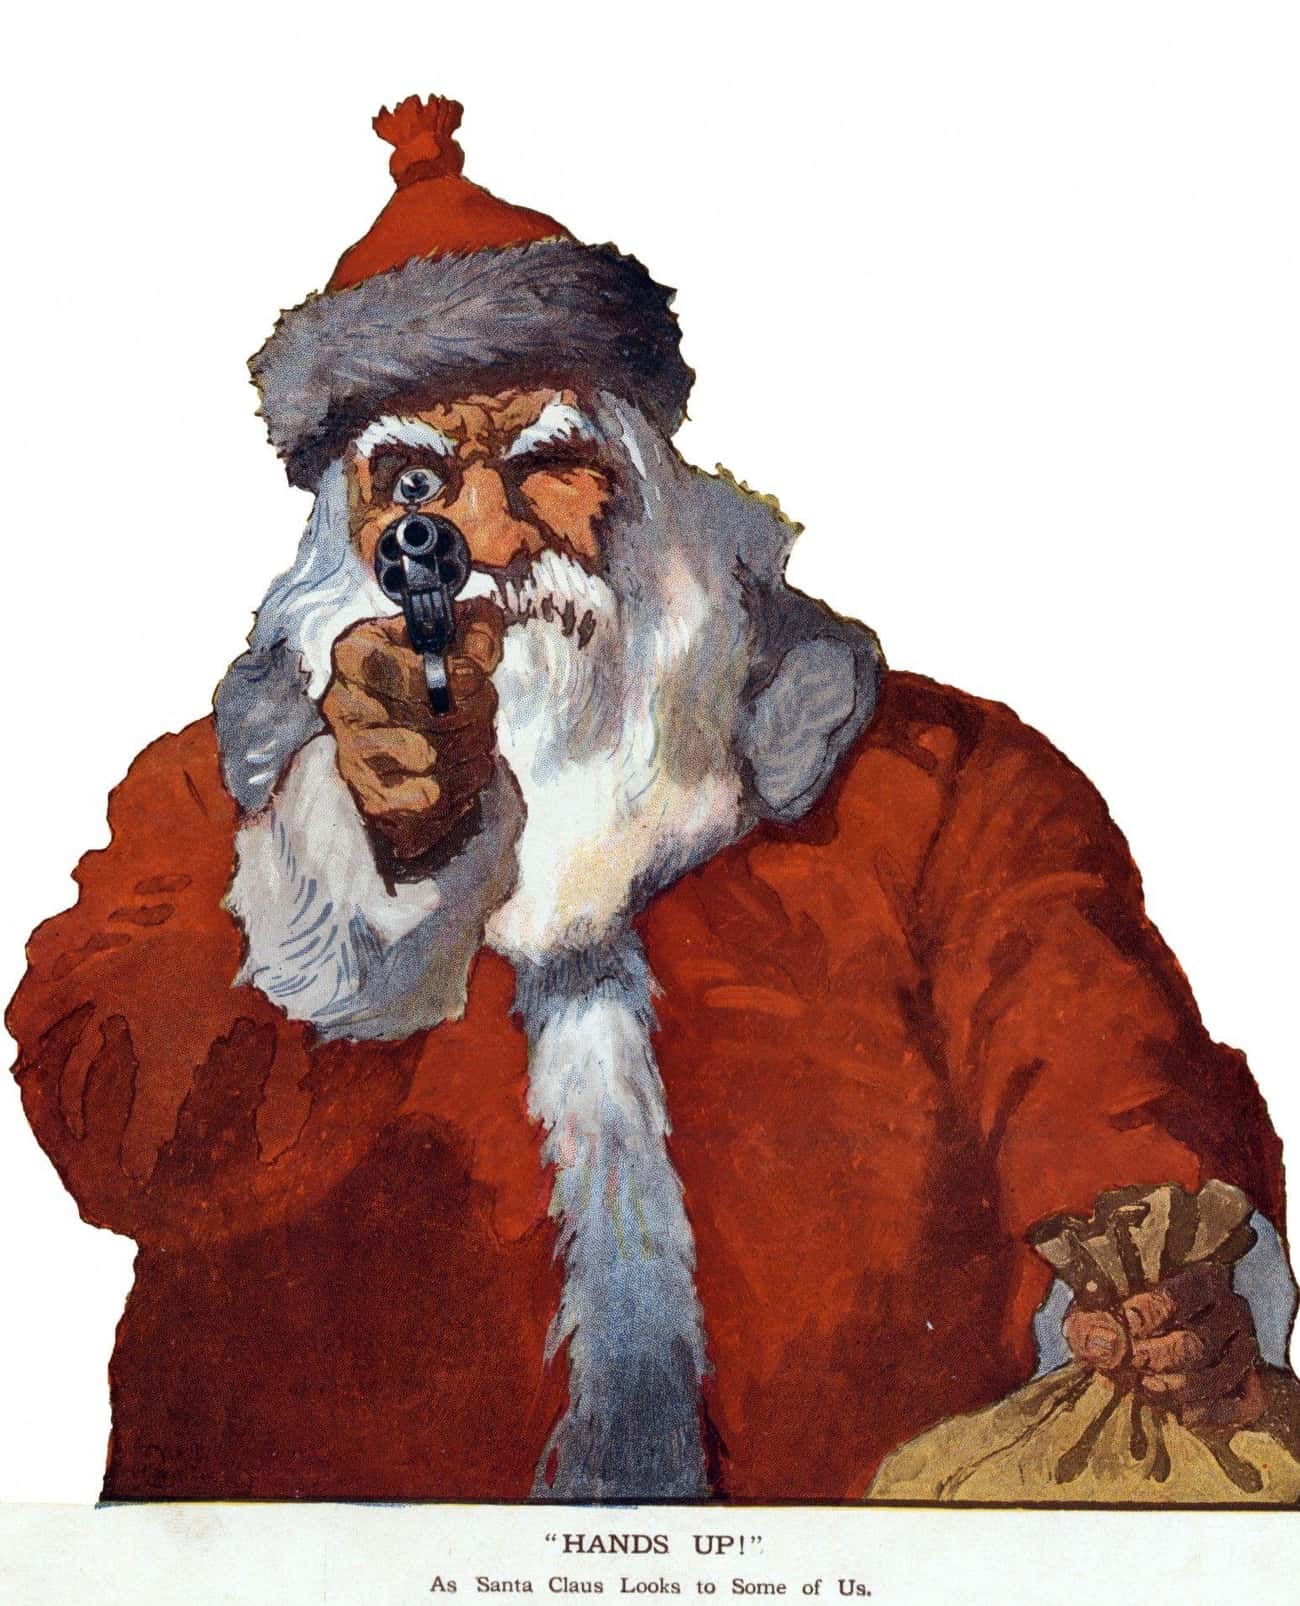 A Bank-Robbing Santa Claus Turned To Murder